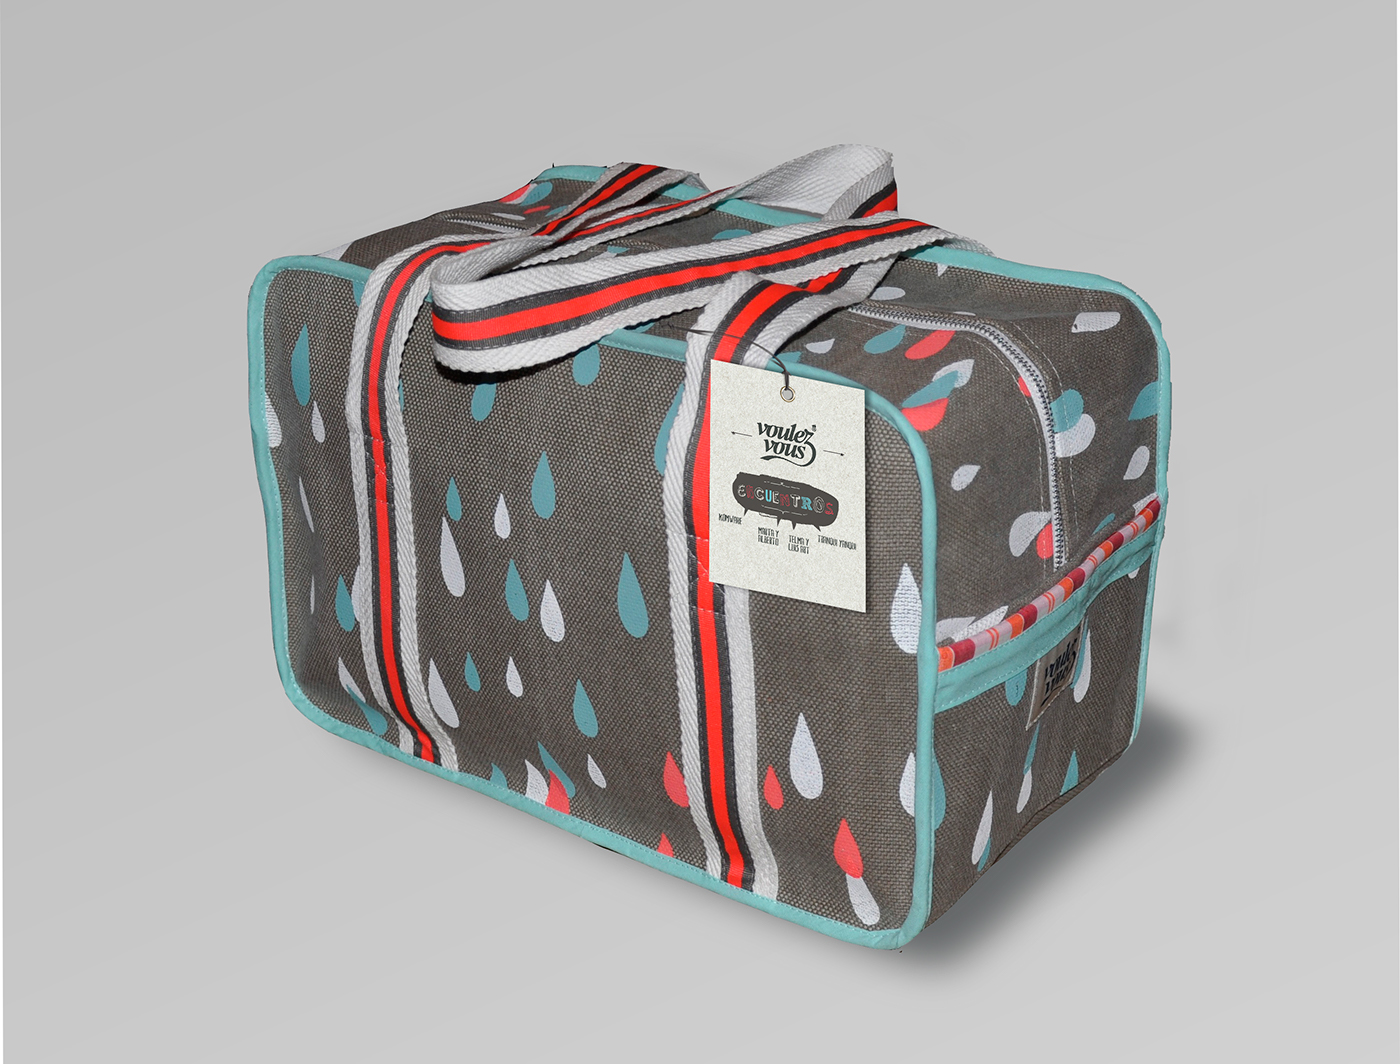 Adobe Portfolio voulez vous Paris handbags buenos aires carteras tags Vania Silva vanya silva carton cardboard colors etiqueta diseño